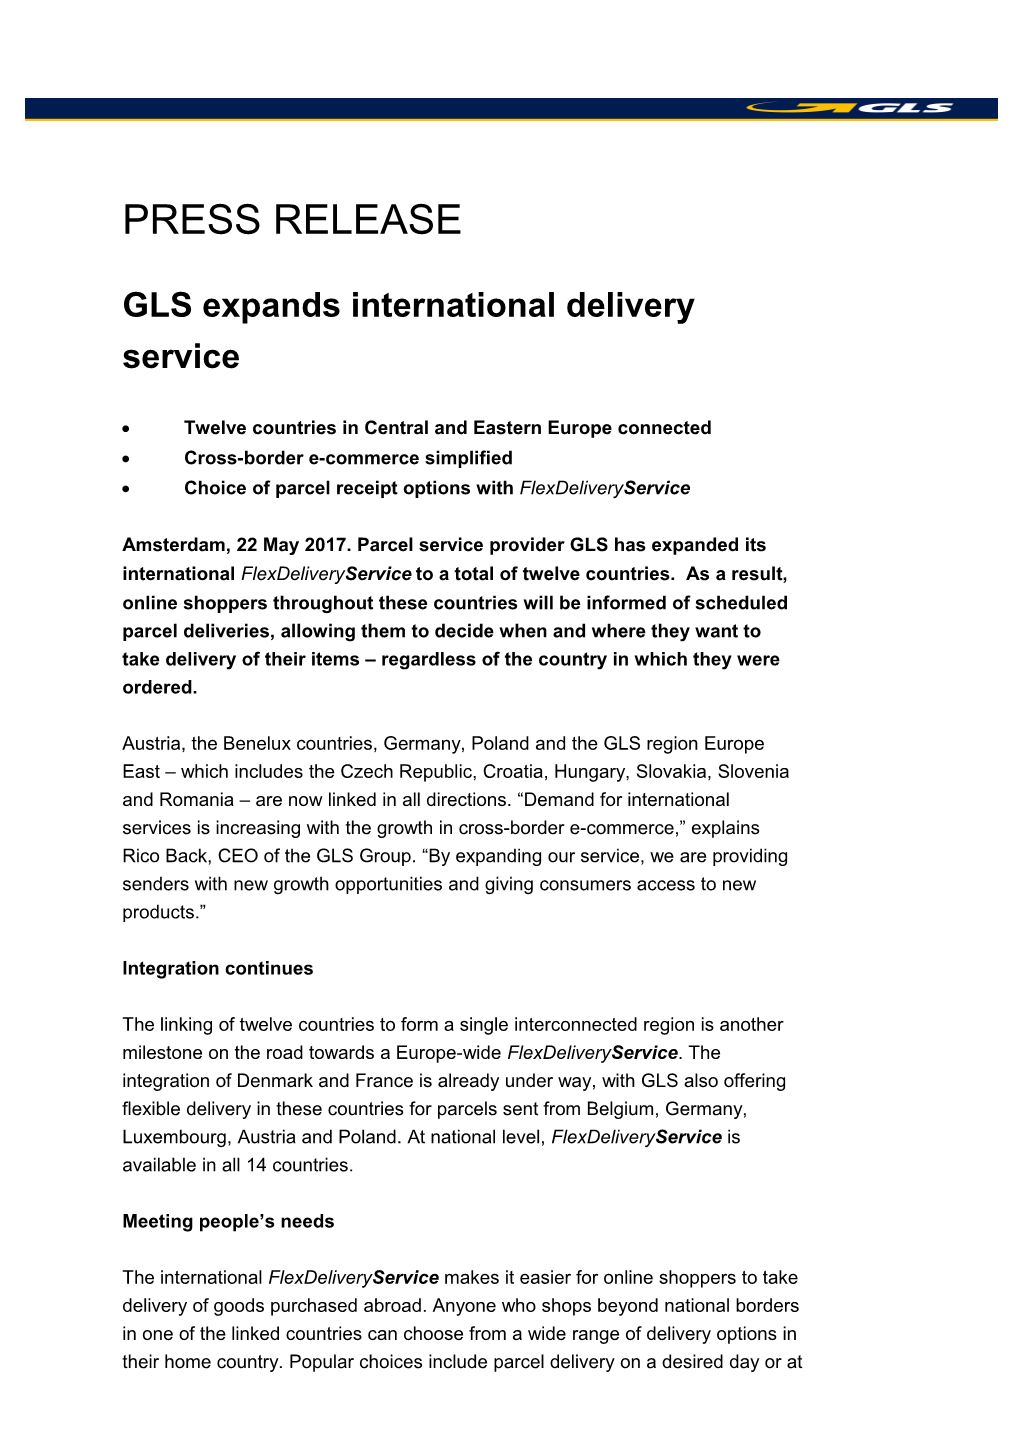 GLS Expands International Delivery Service